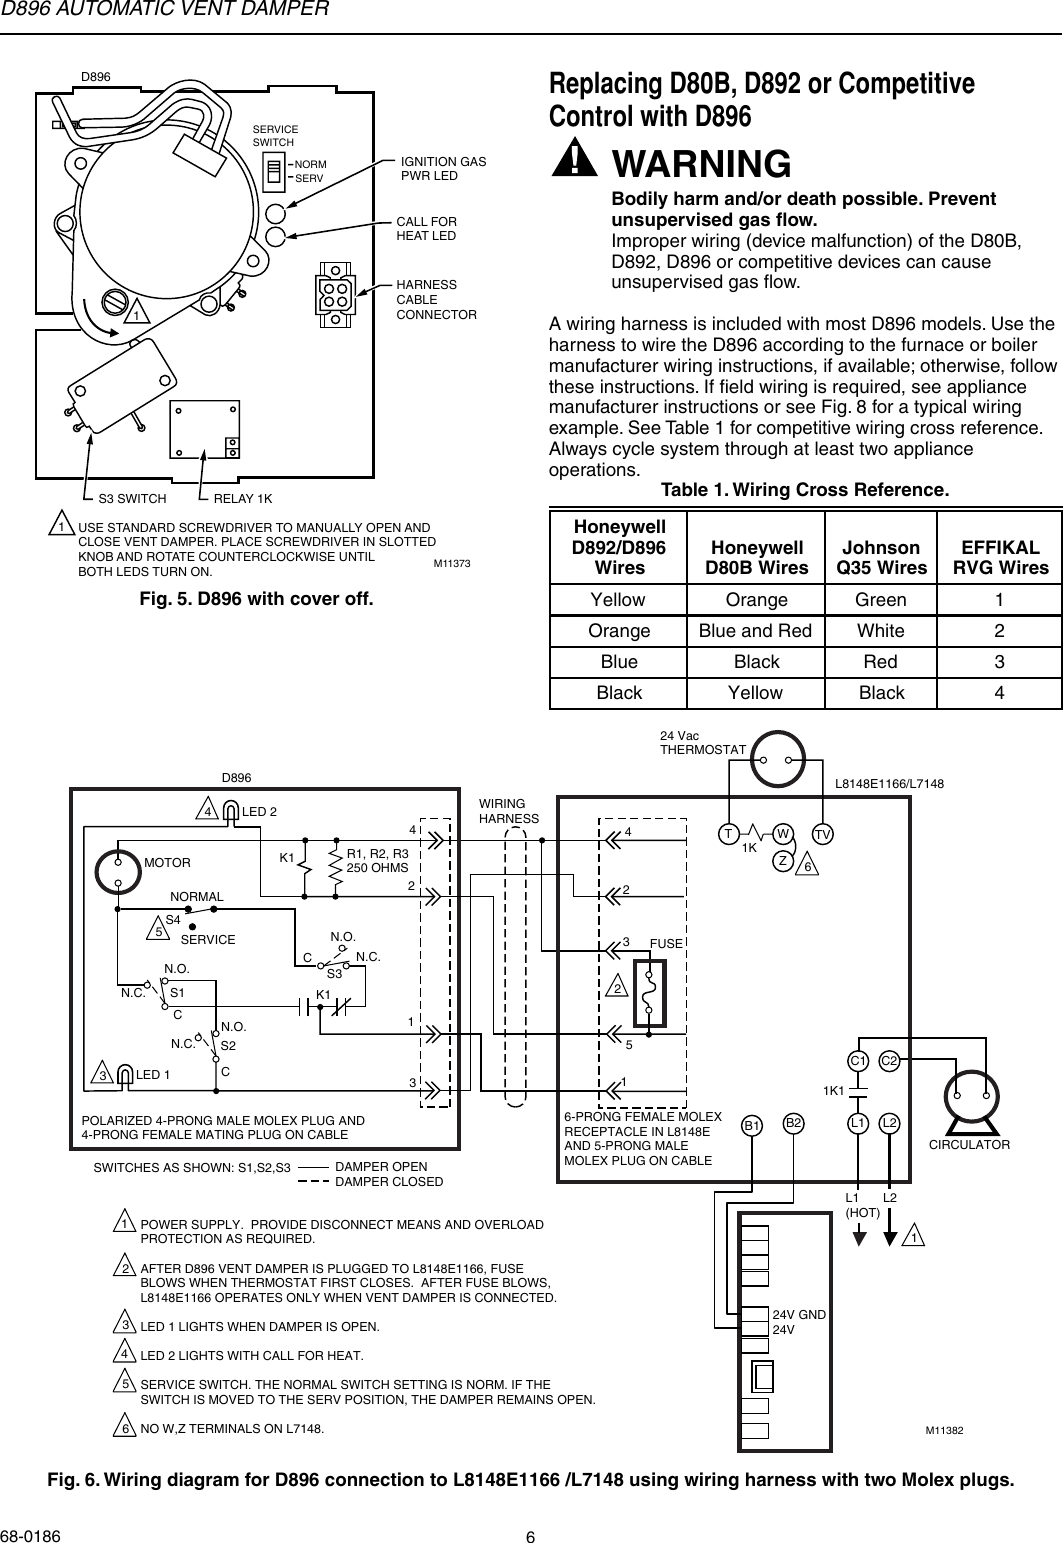 Automatic Vent Damper Wiring Diagram